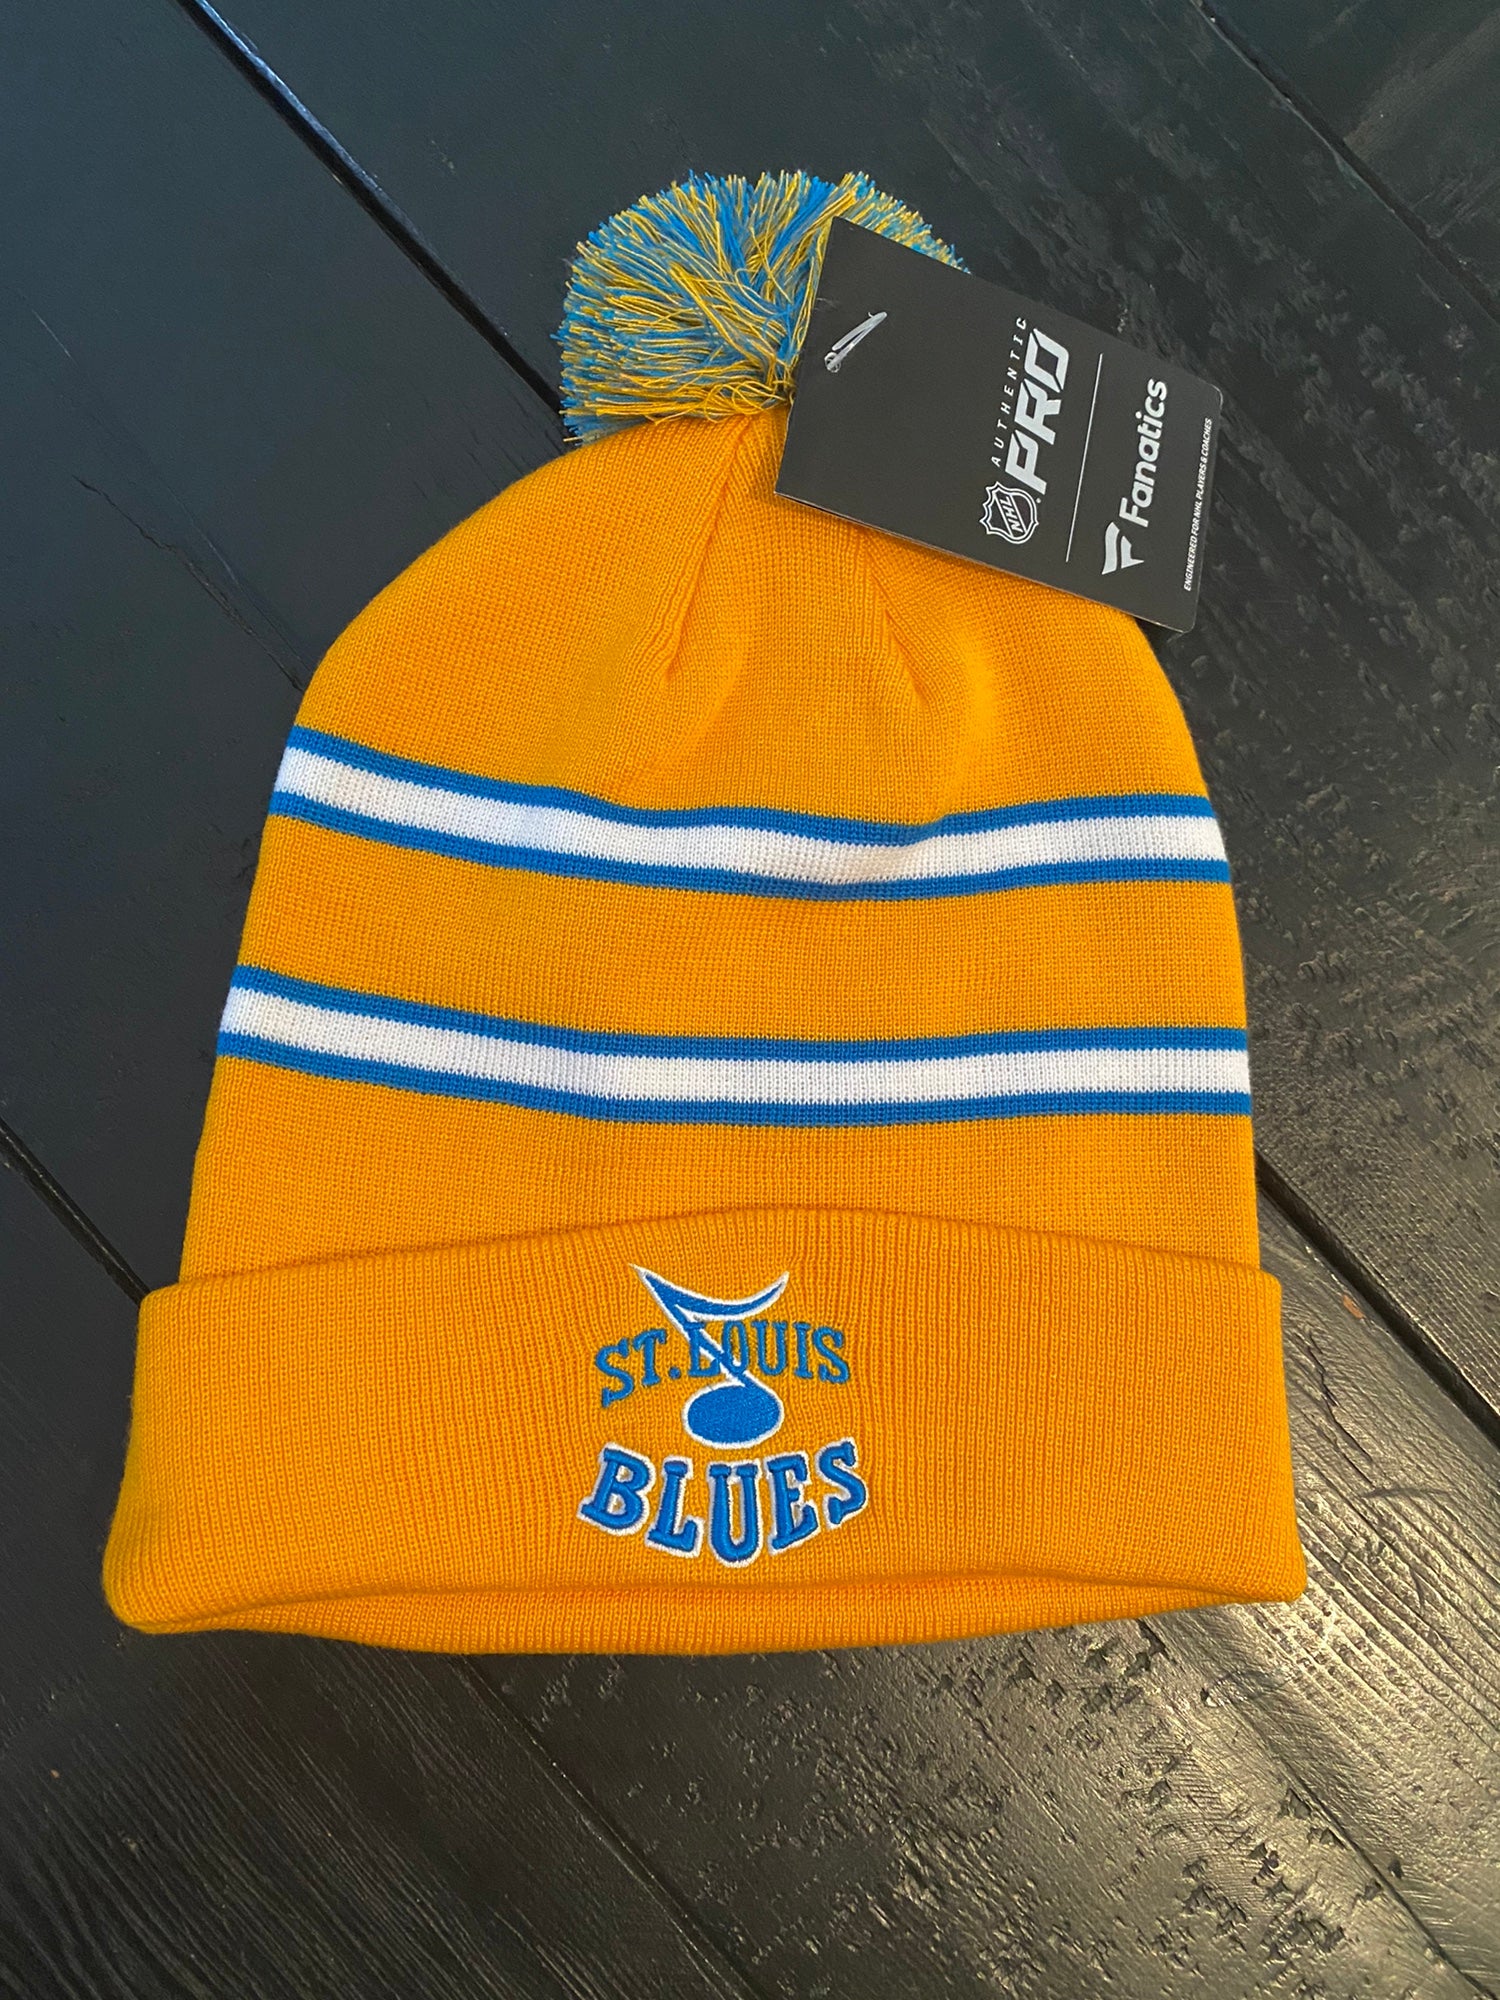 St. Louis Blues Hockey Reverse Retro Logo Adult Bucket Hat SGA